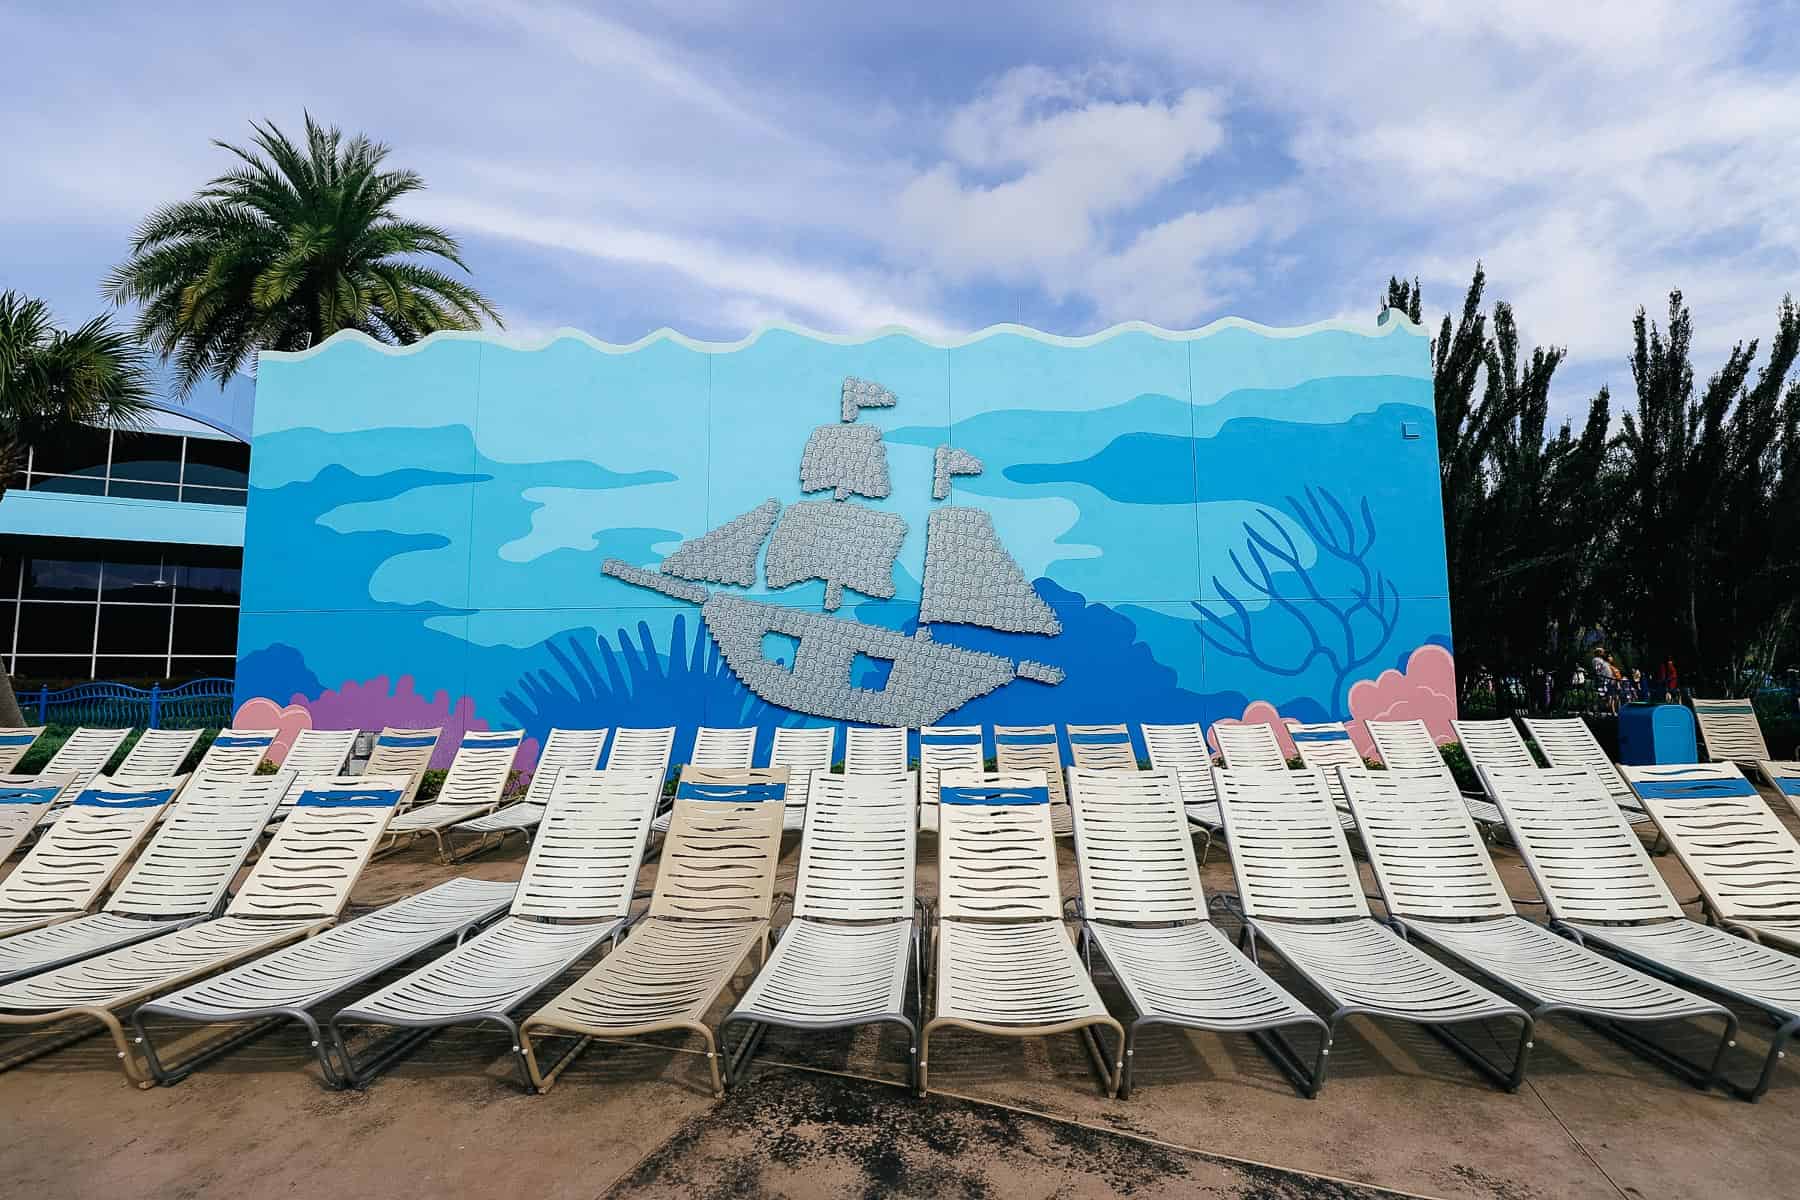 Decorative Ship at The Big Blue Pool at Art of Animation